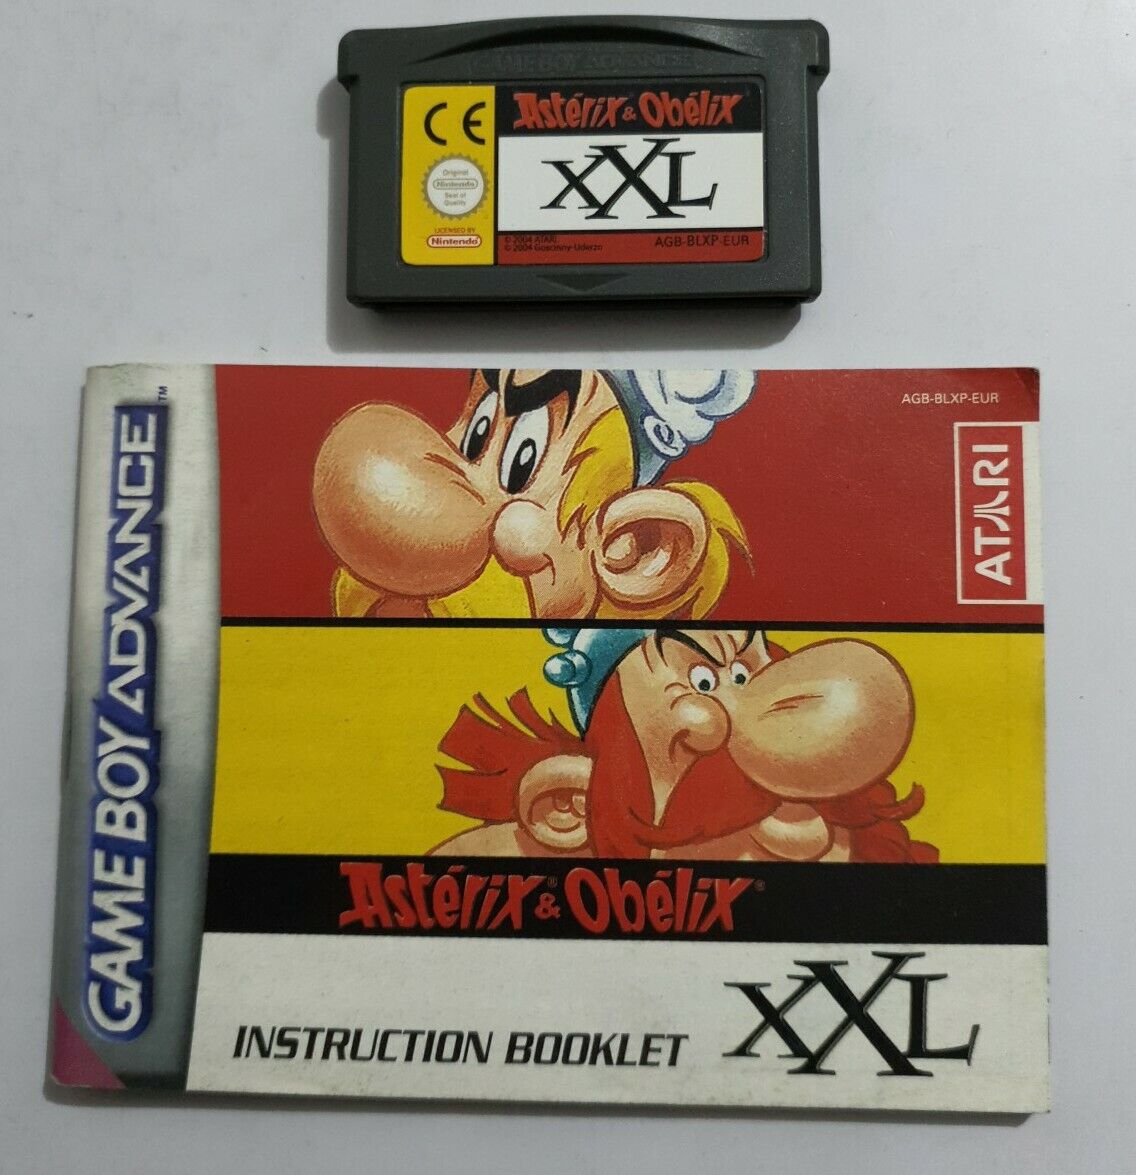 Asterix & Obelix XXL Game Boy Advance pal EUR GBA cartucho+MANUAL 100% ORIGINAL